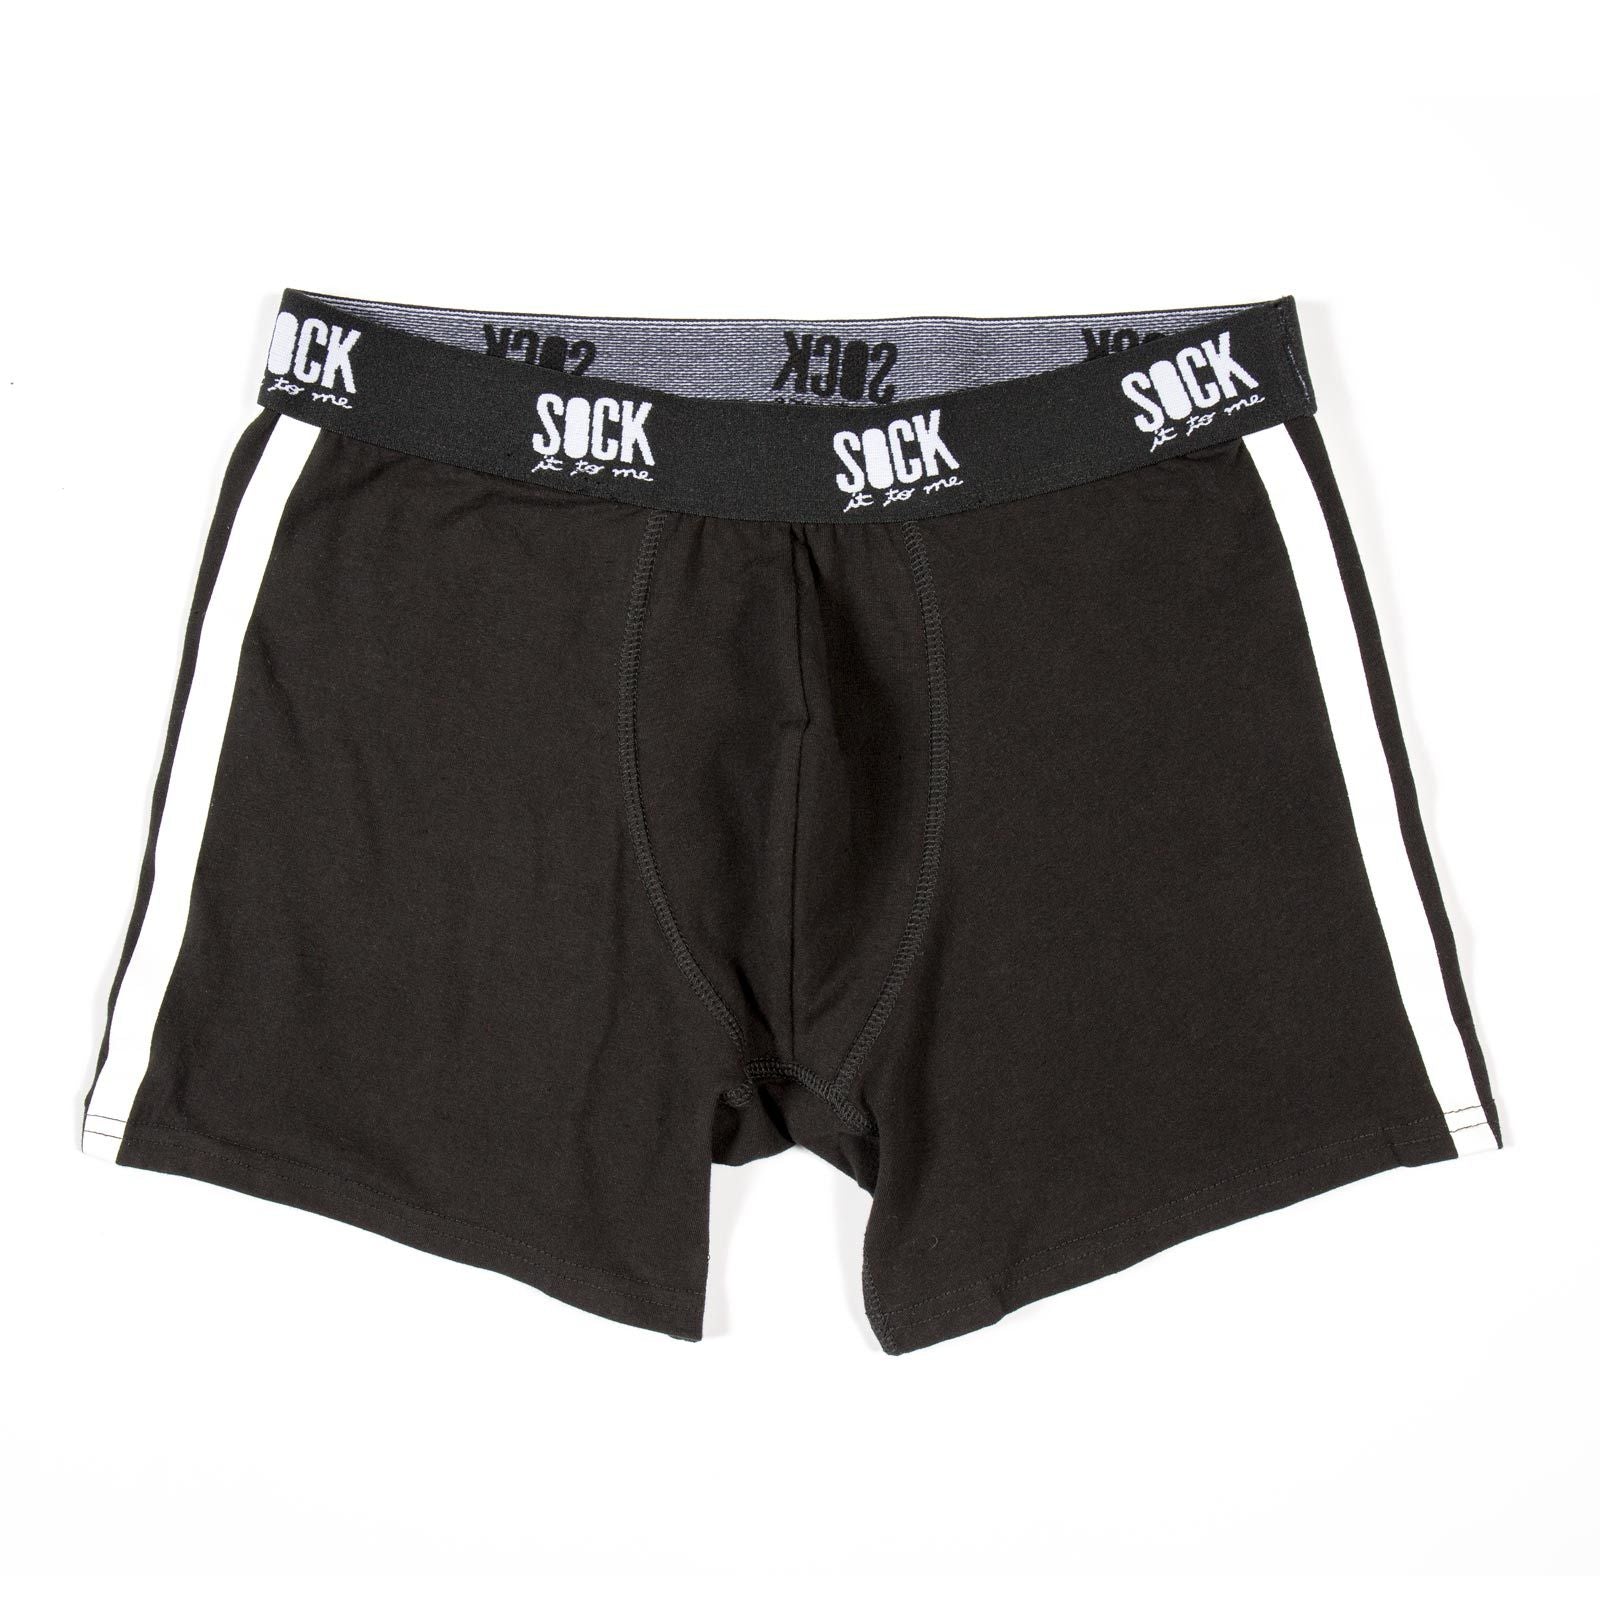 MR Comfort Pattern Polyester Boxer Underwear Design X - Progress Socks